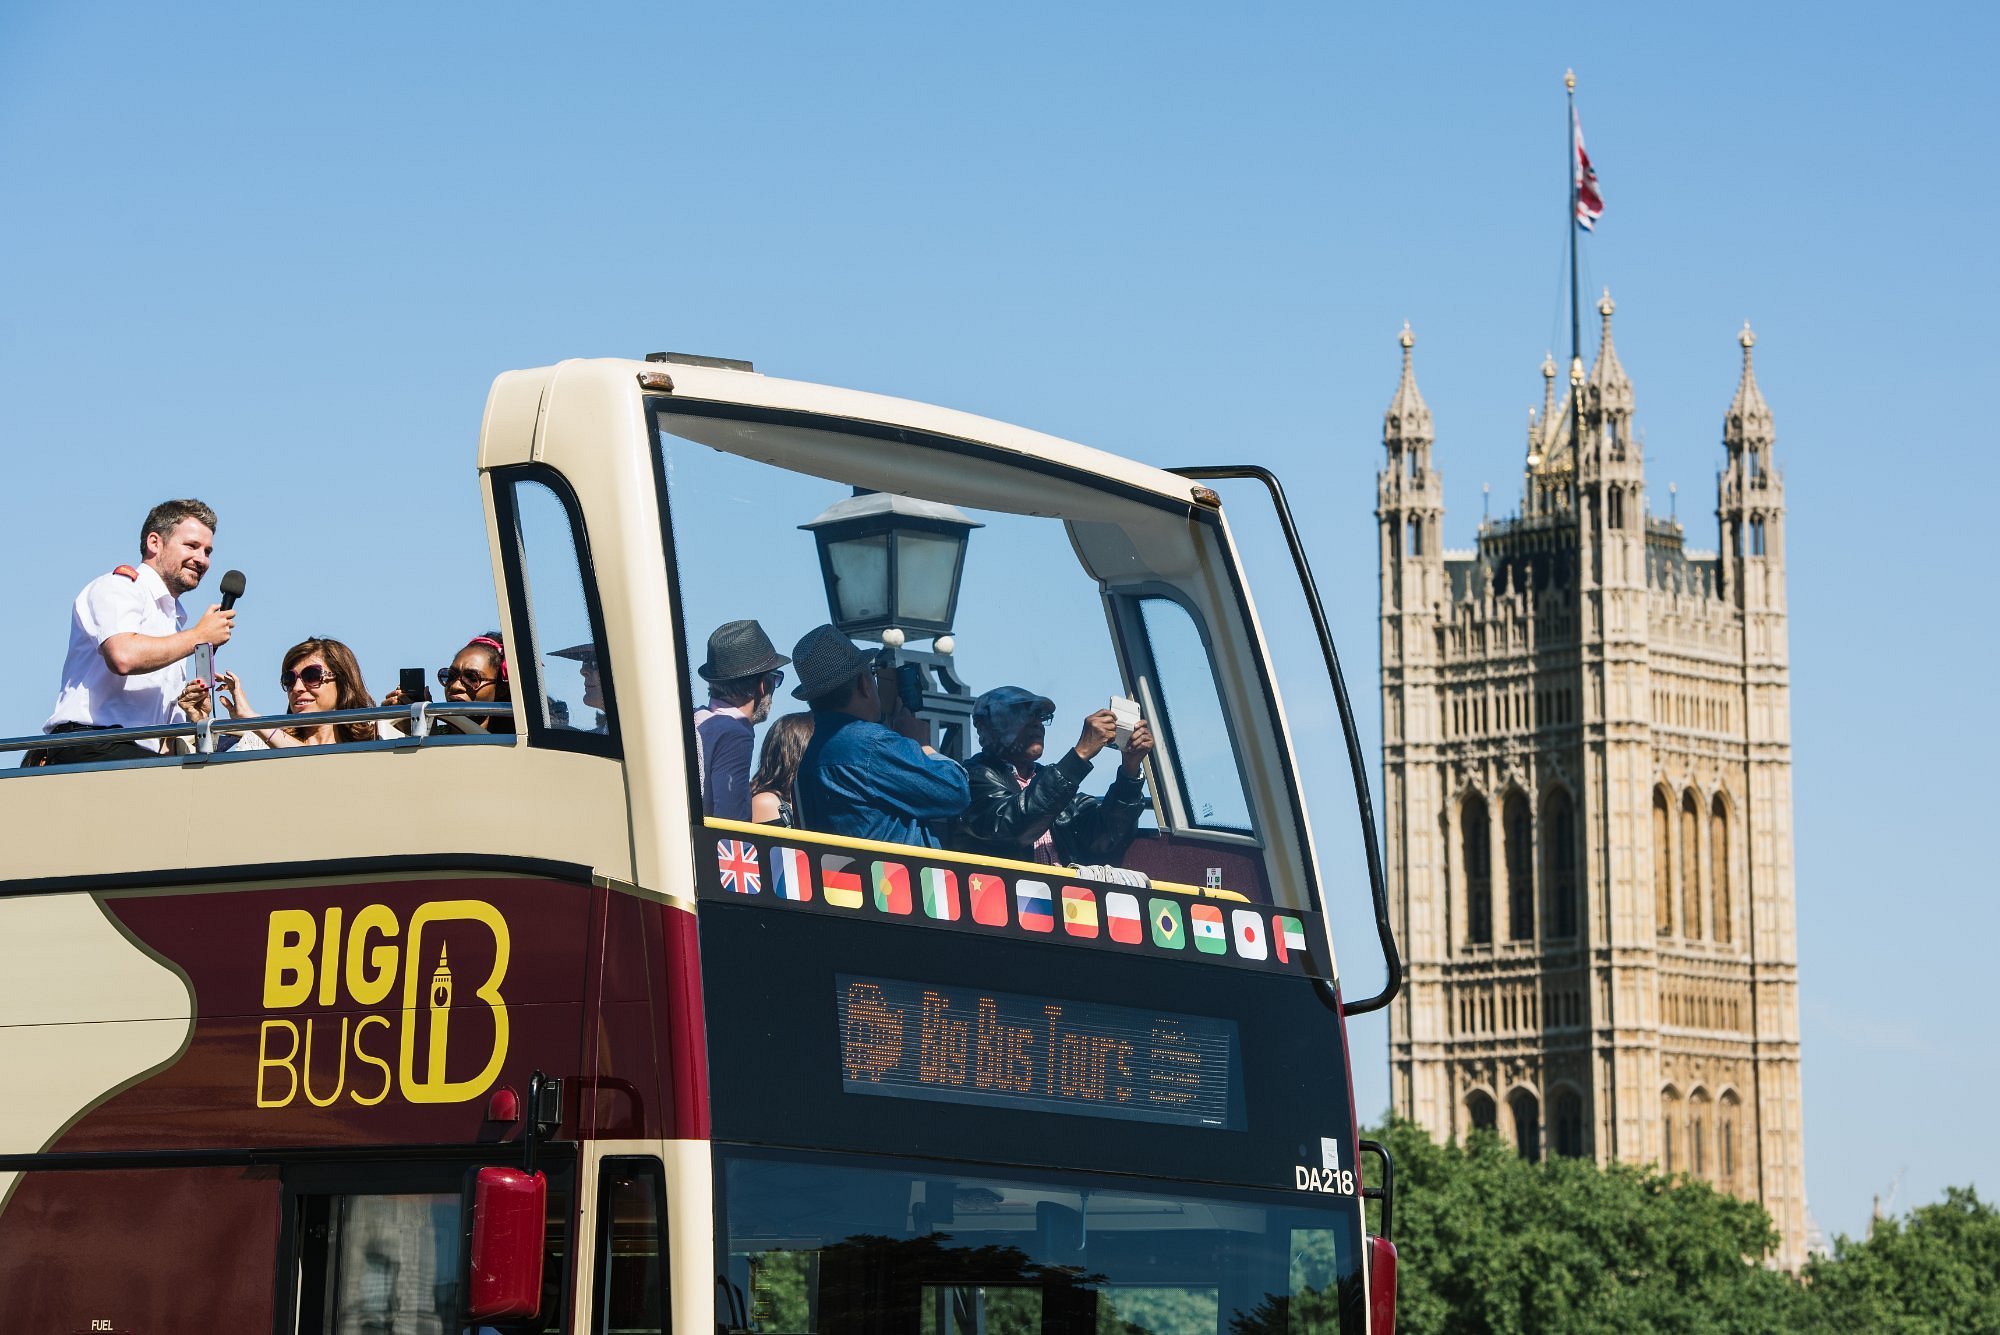 bus tours london offers